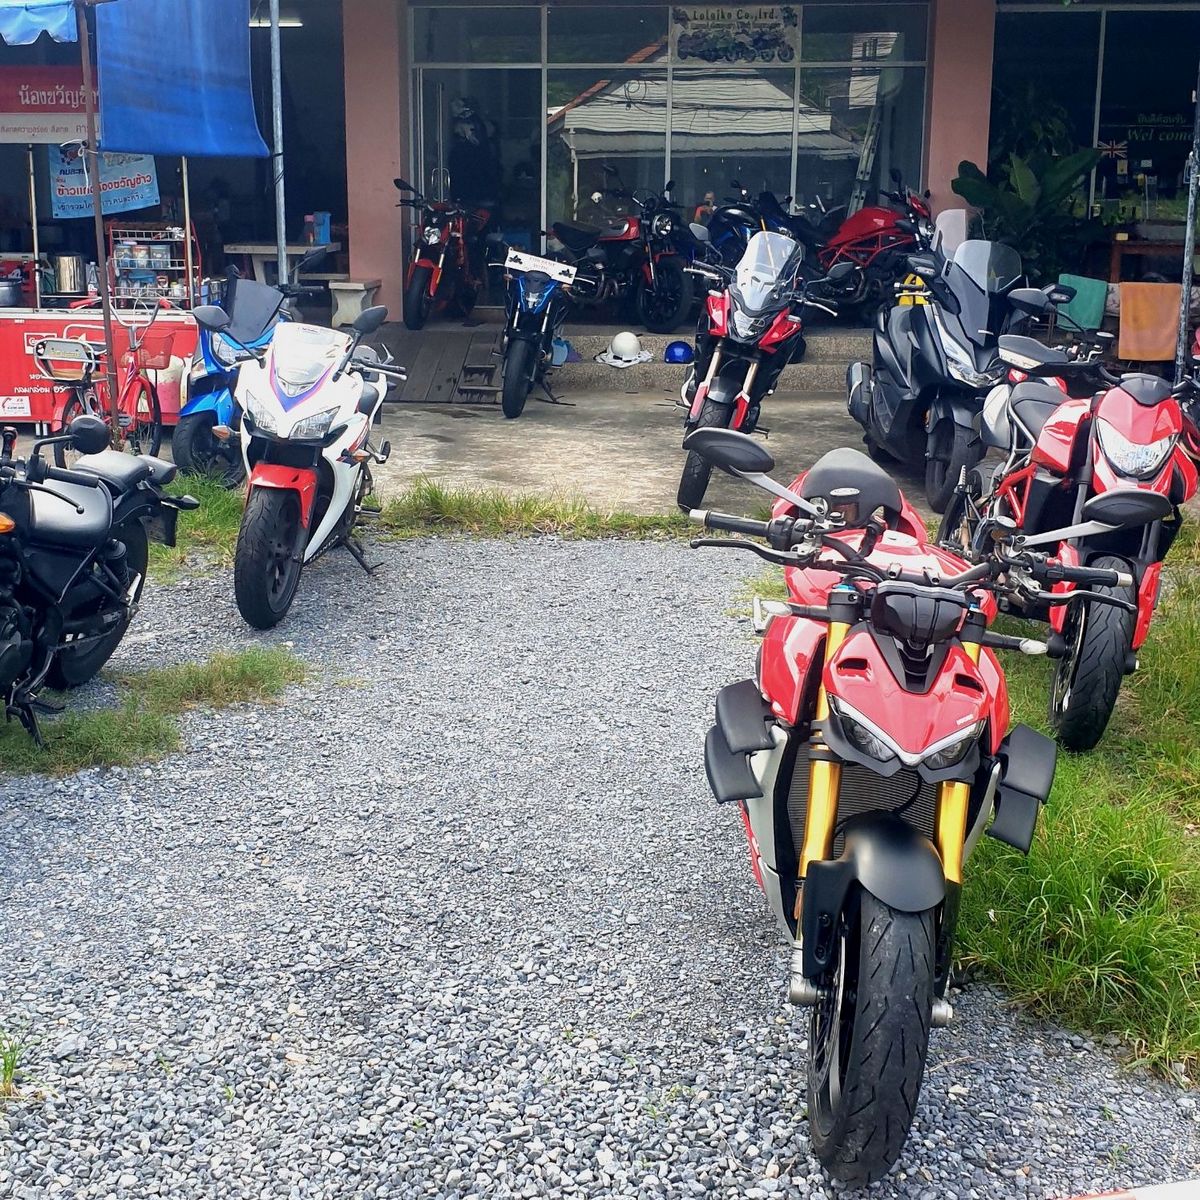 Superbike, Maxi Scooter and Car rental in Rawai, Phuket,